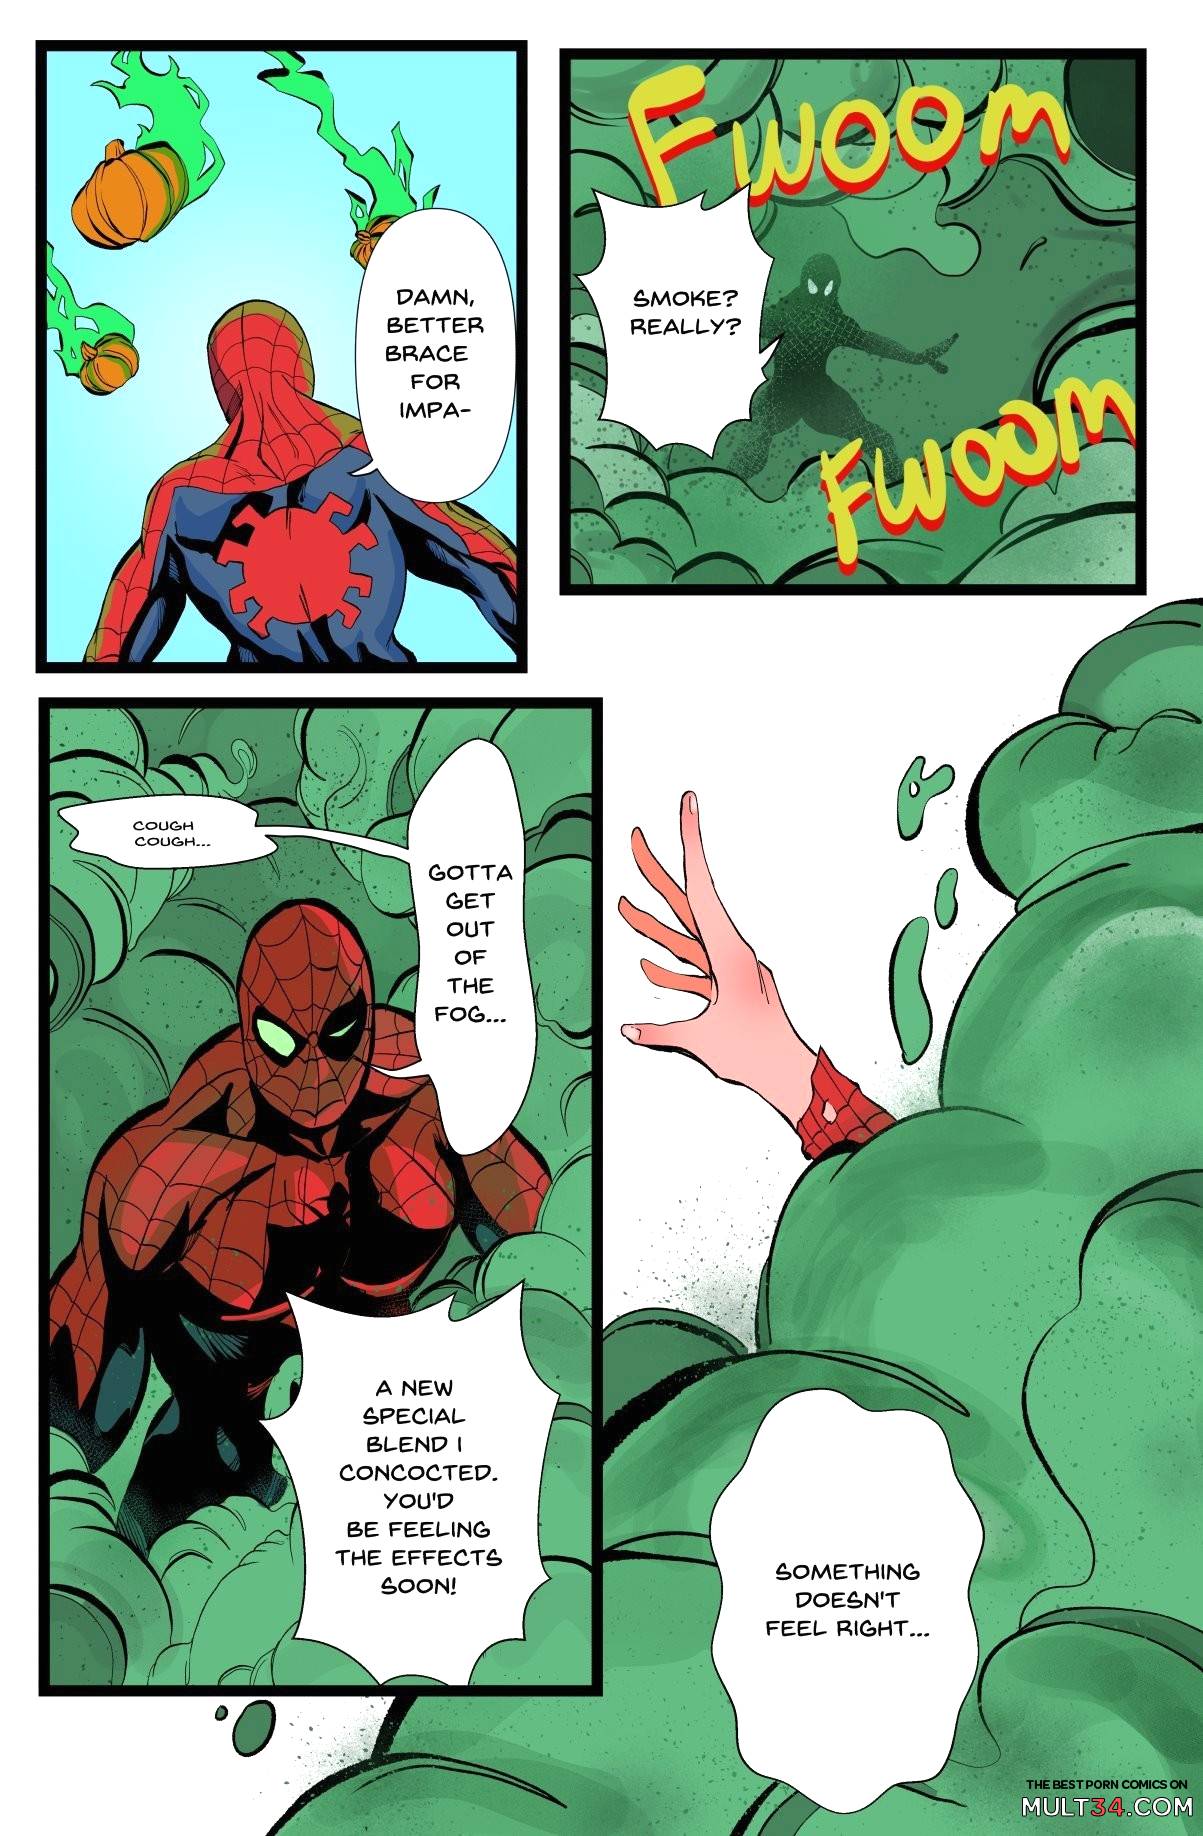 Spider-Man: No Way Male page 3